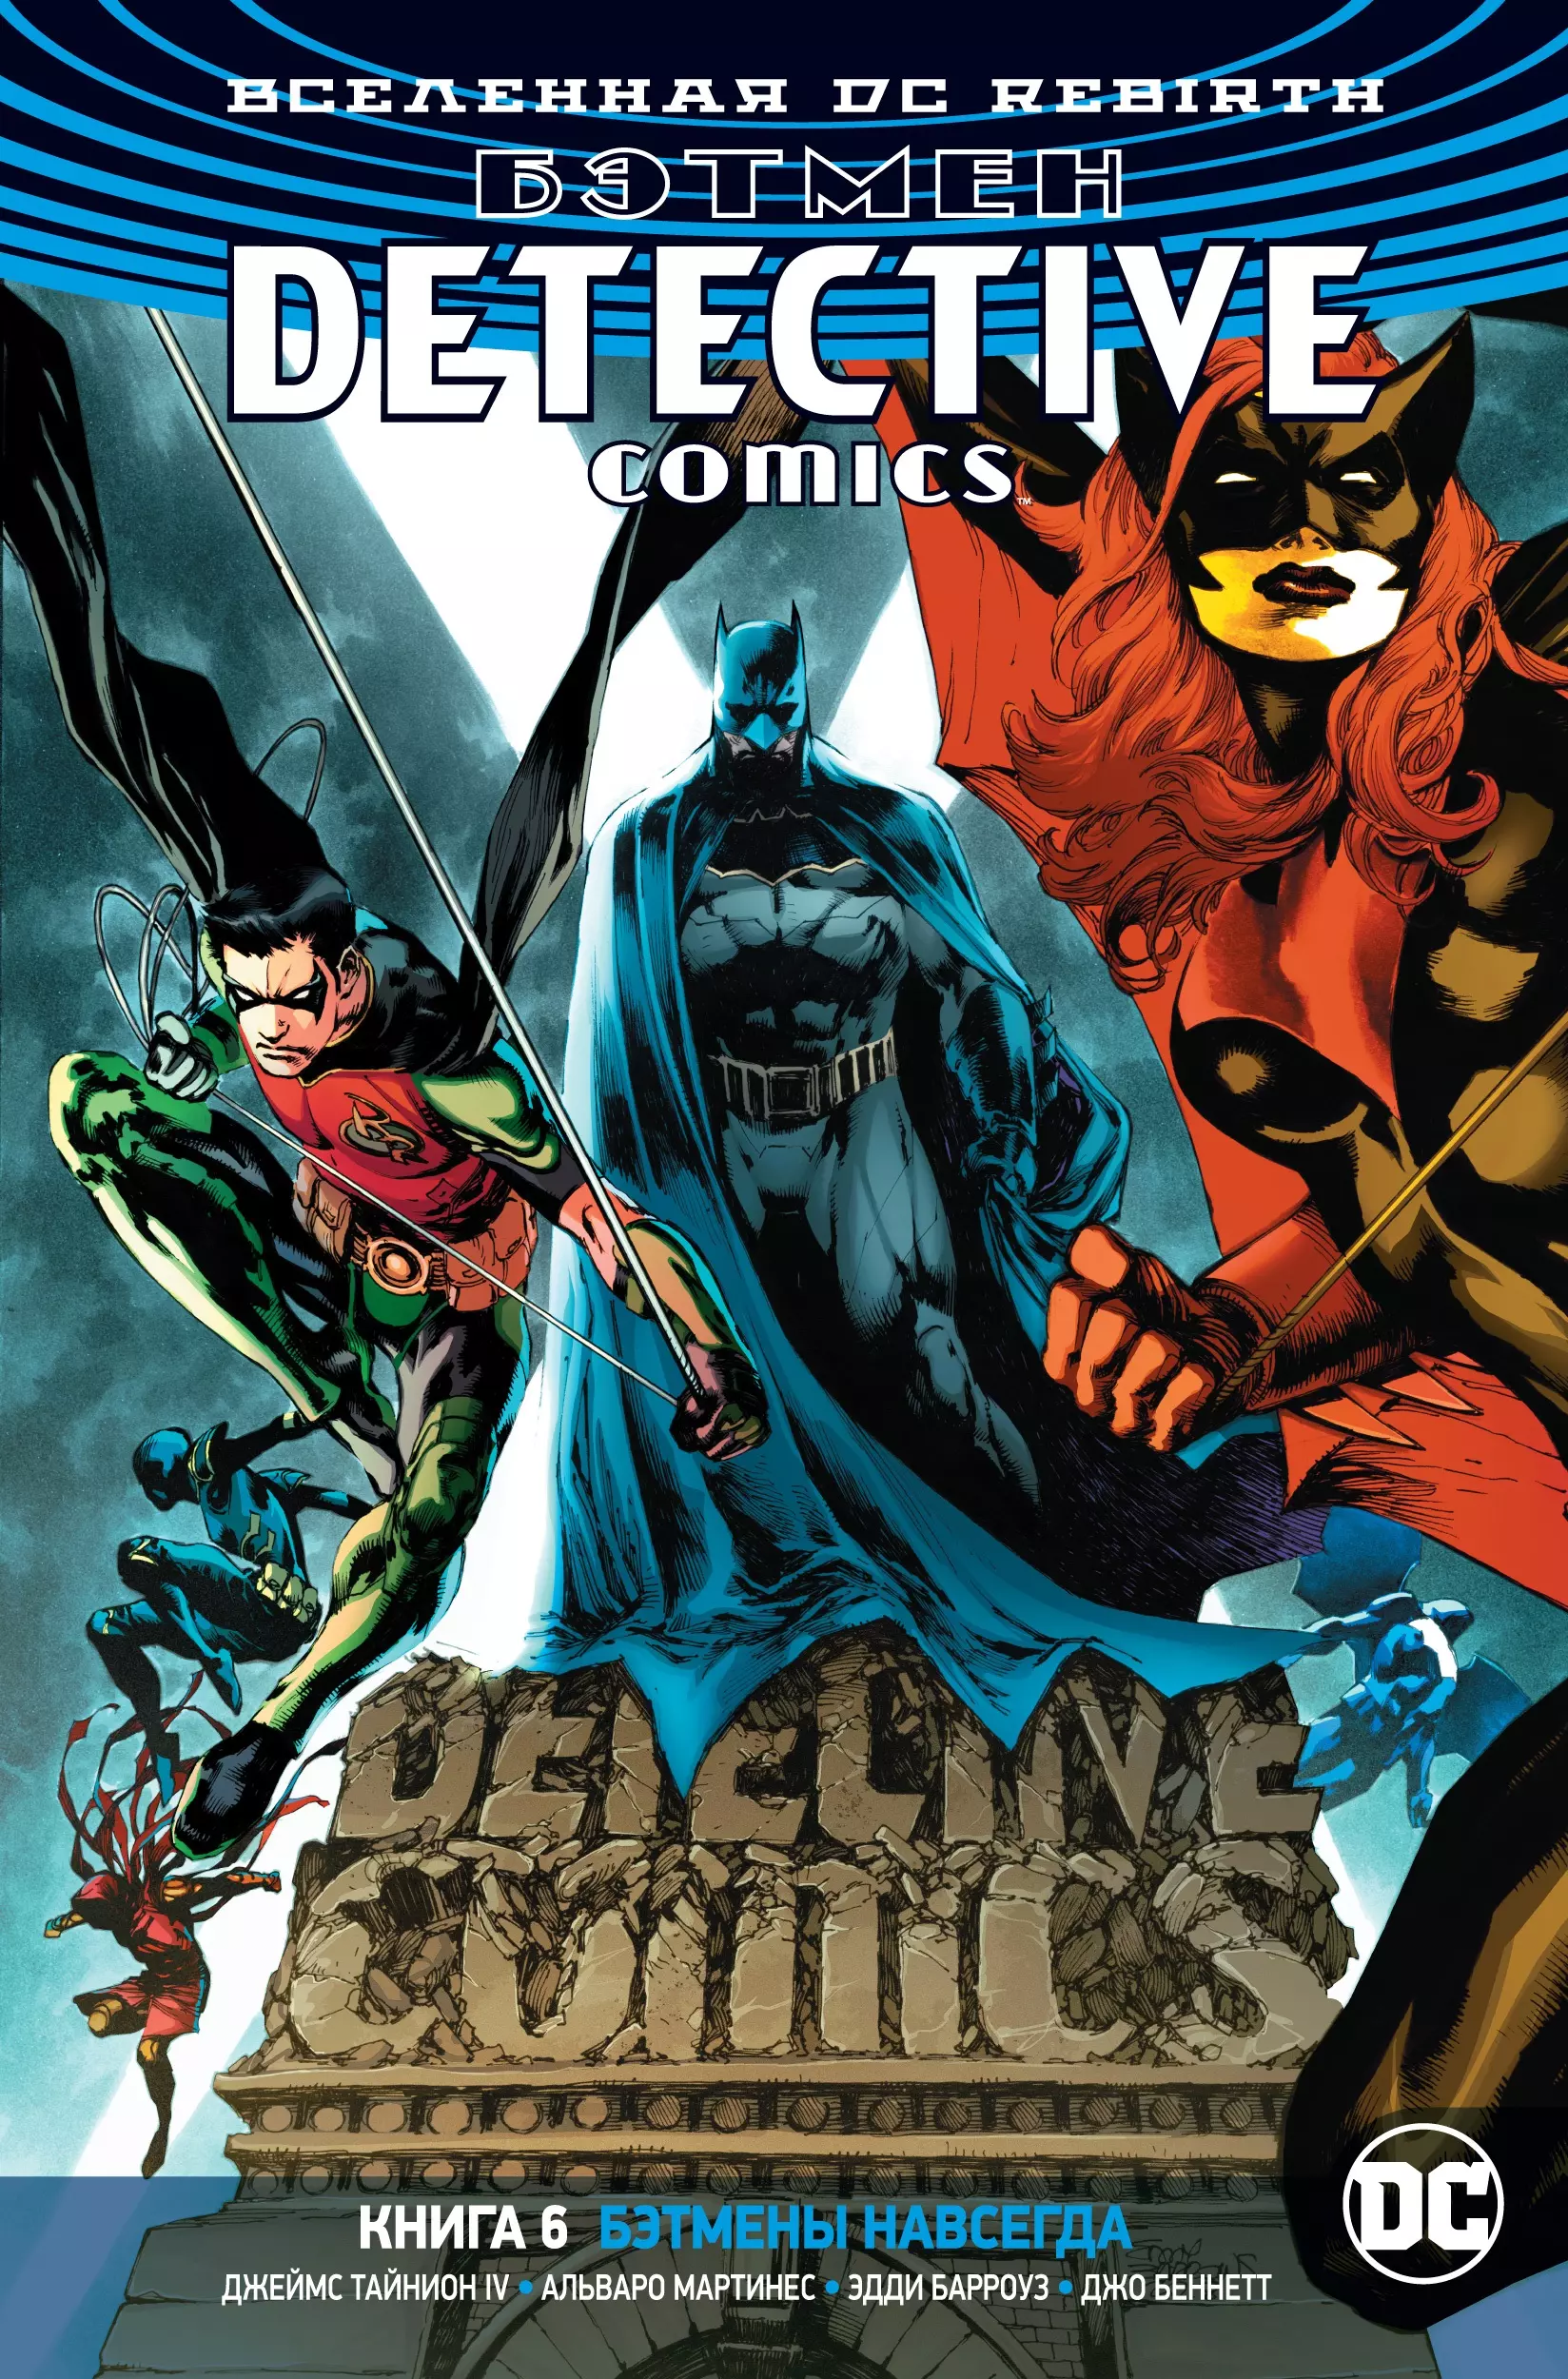 Тайнион IV Джеймс, Мартинес Альваро, Барроуз Эдди - Вселенная DC. Rebirth. Бэтмен. Detective Comics. Книга 6. Бэтмены навсегда